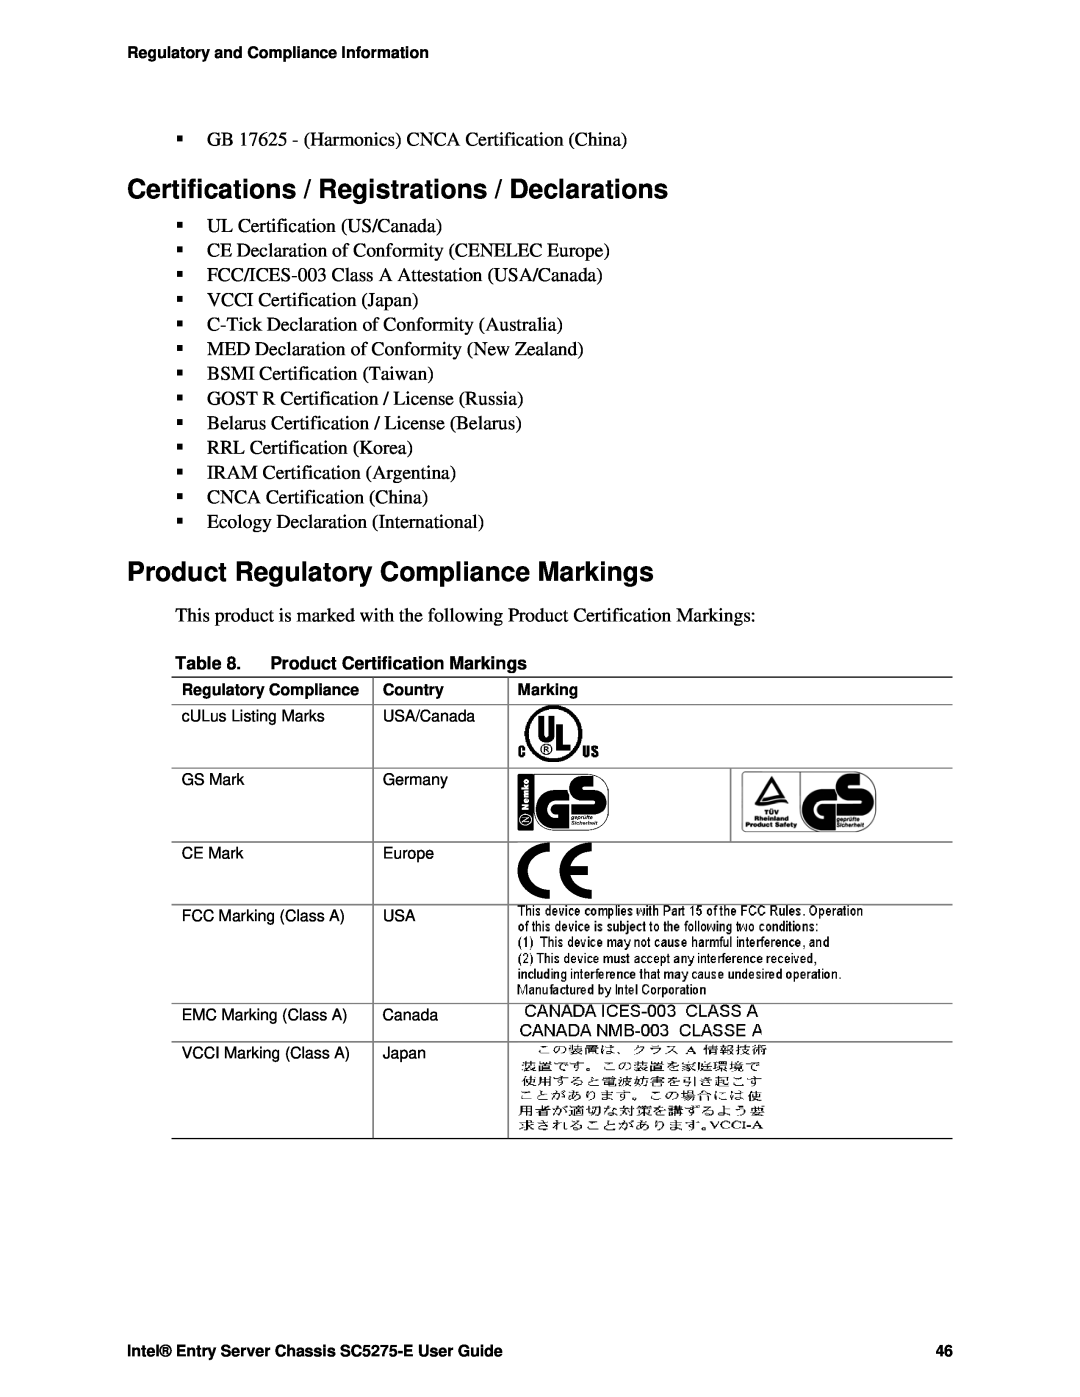 Intel SC5275-E, C50277-001 manual Certifications / Registrations / Declarations, Product Regulatory Compliance Markings 